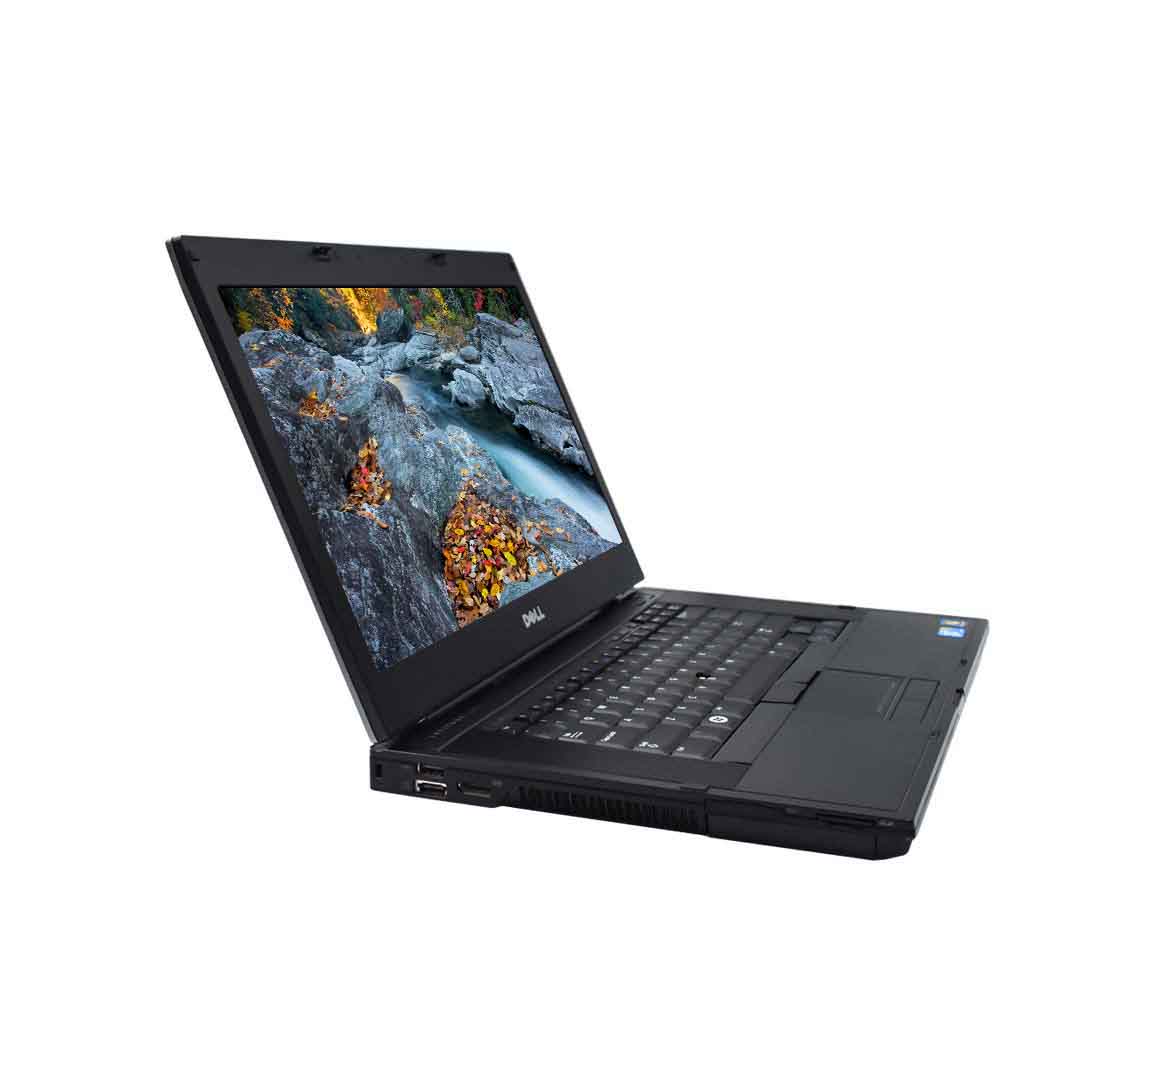 Dell Latitude E6510 Business Laptop, Intel Core i5-1st Generation CPU, 4GB RAM, 500GB HDD, 15.6 inch Display, Windows 10 Pro, Refurbished Laptop